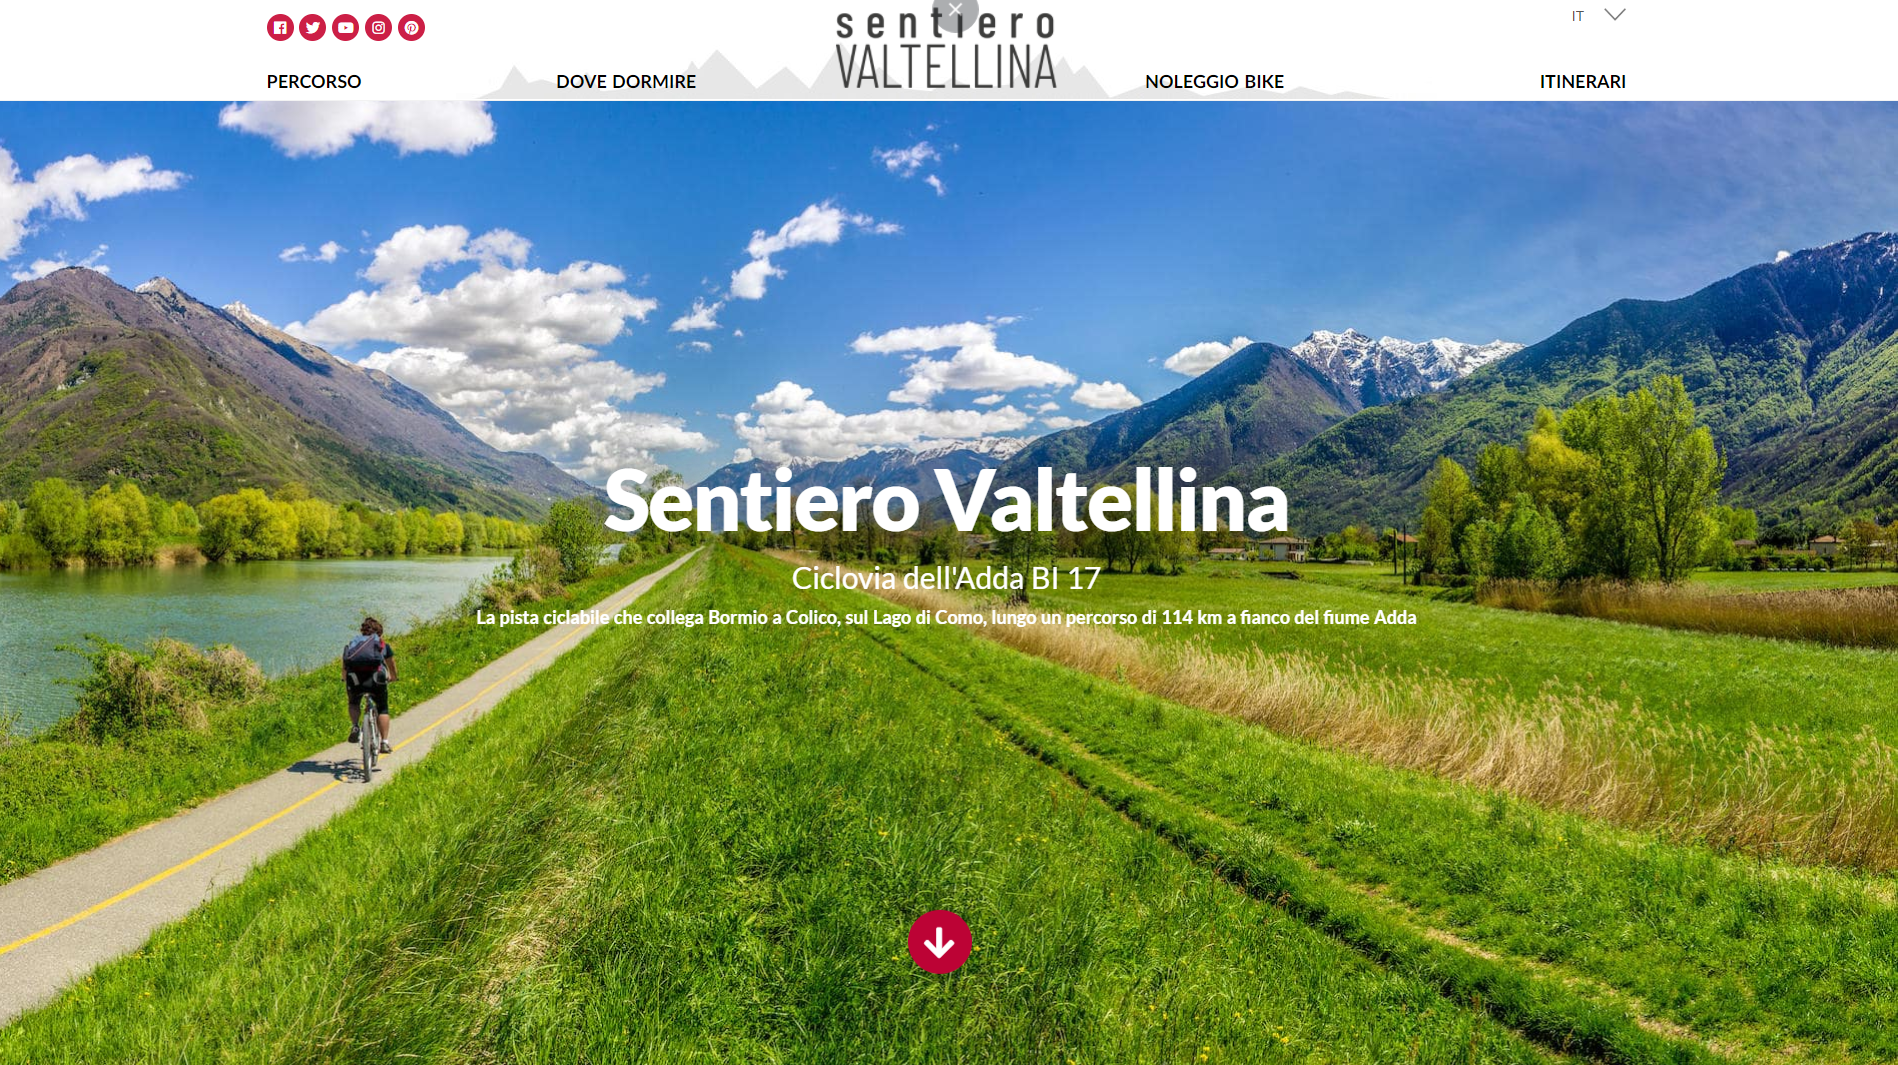 Sentiero Valtellina - Dove Dormire screenshot 1